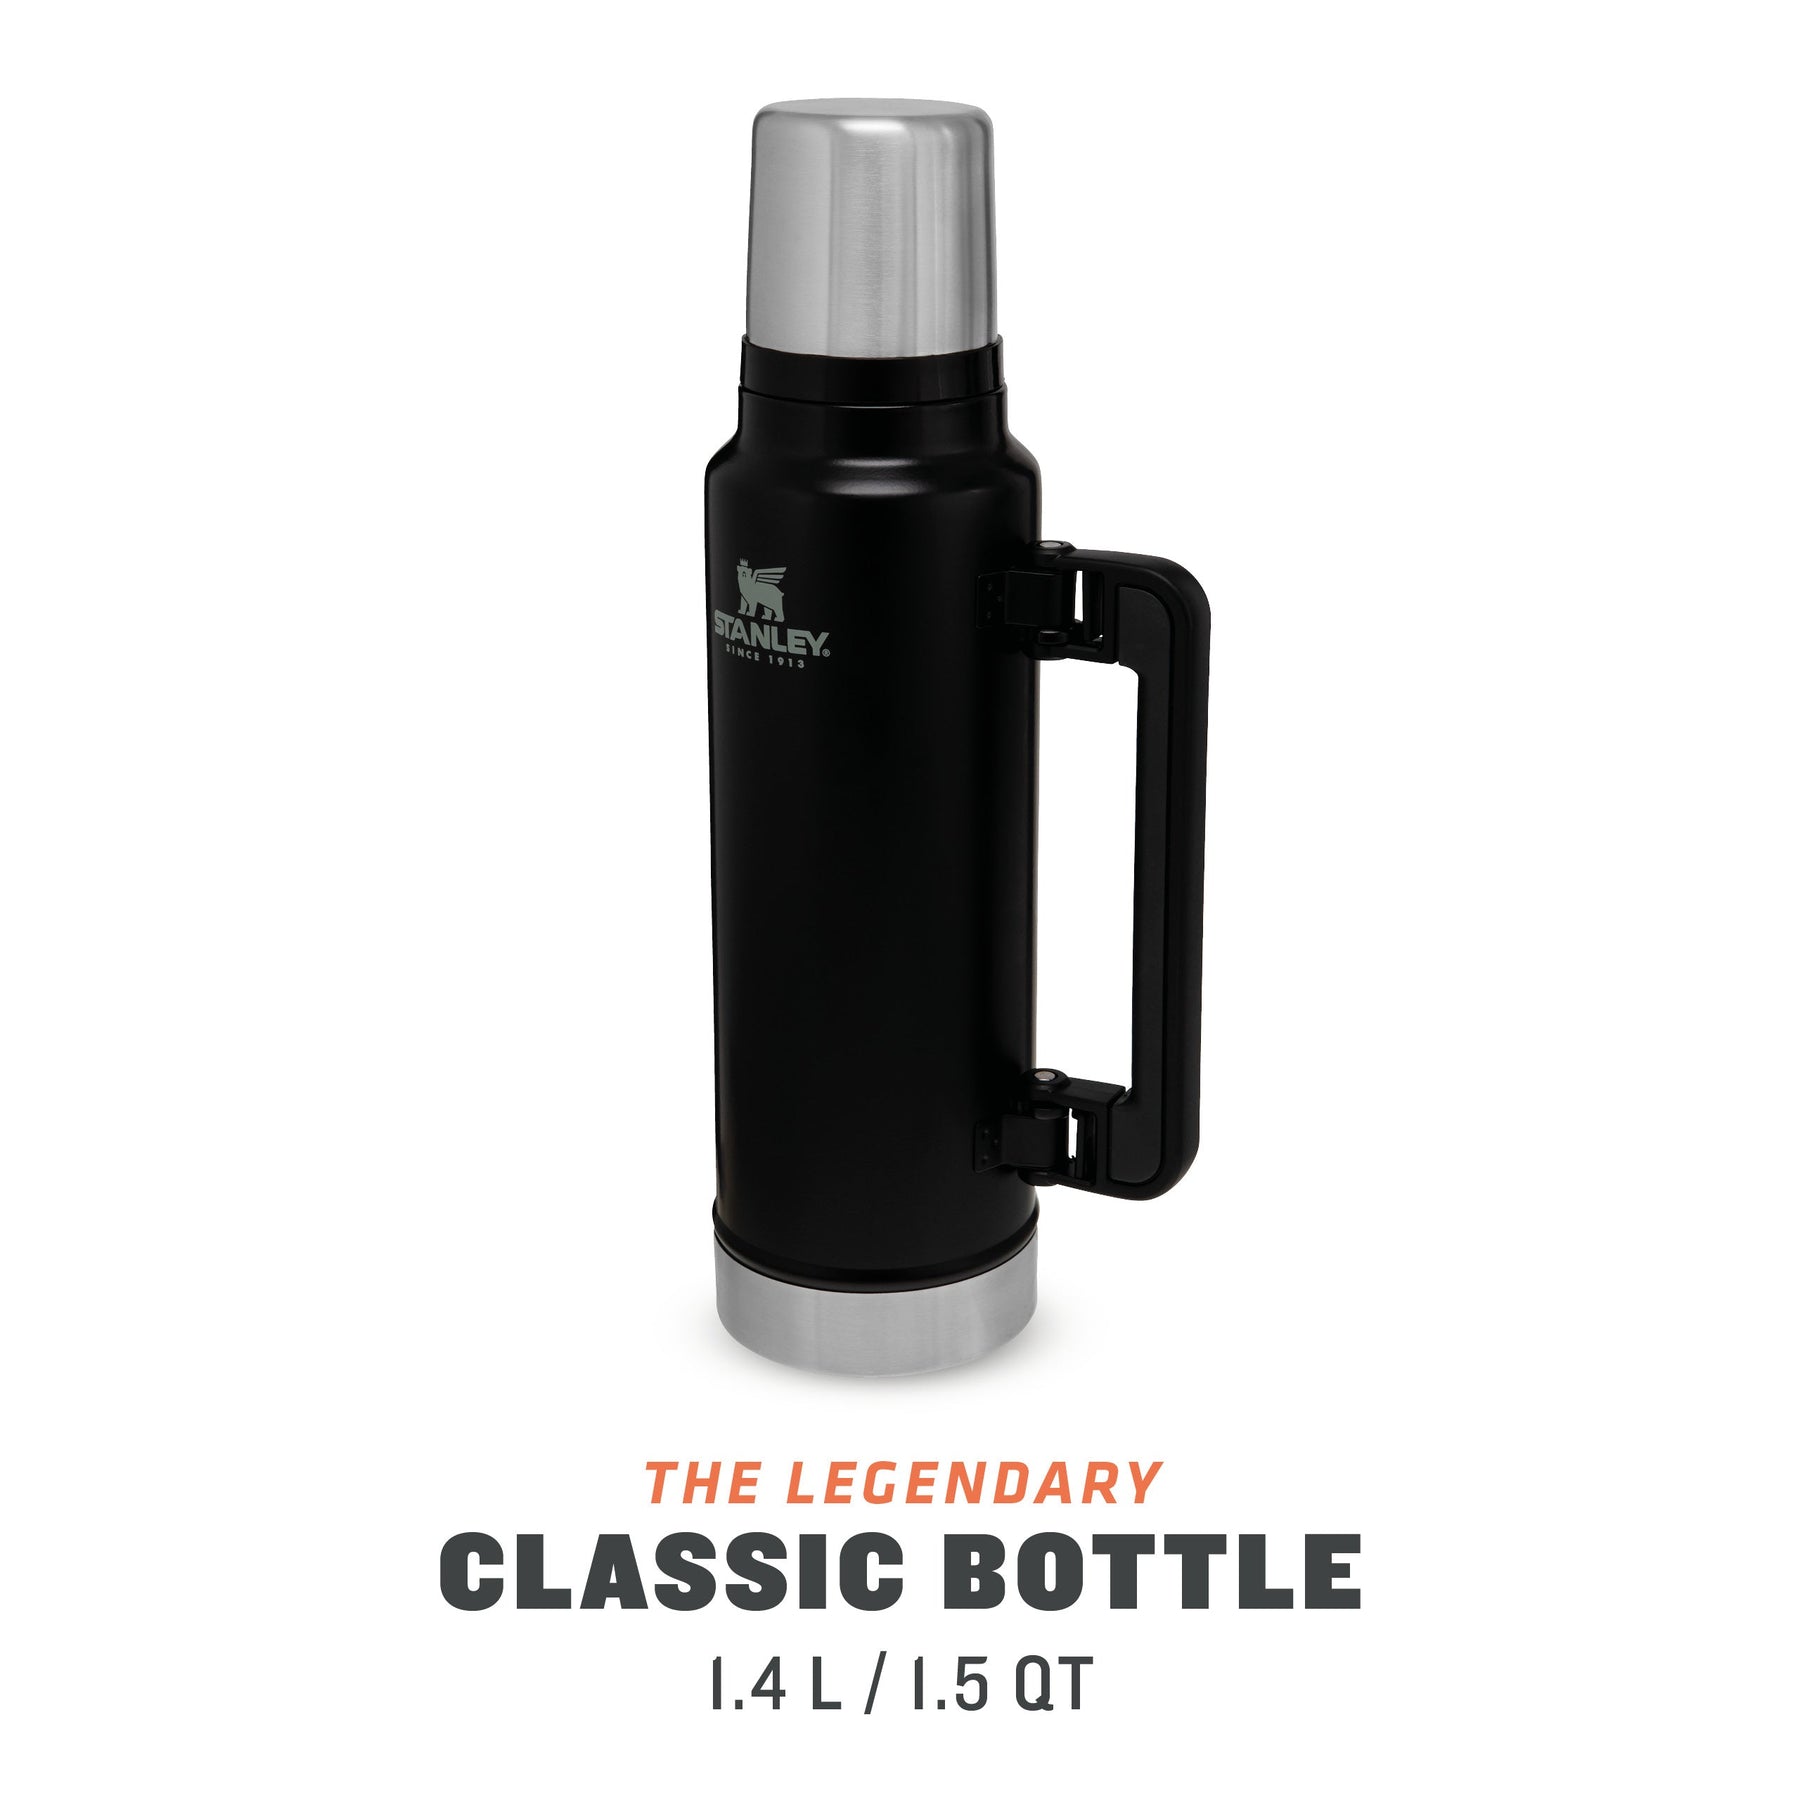 Classic Legendary Bottle, 1.4 L